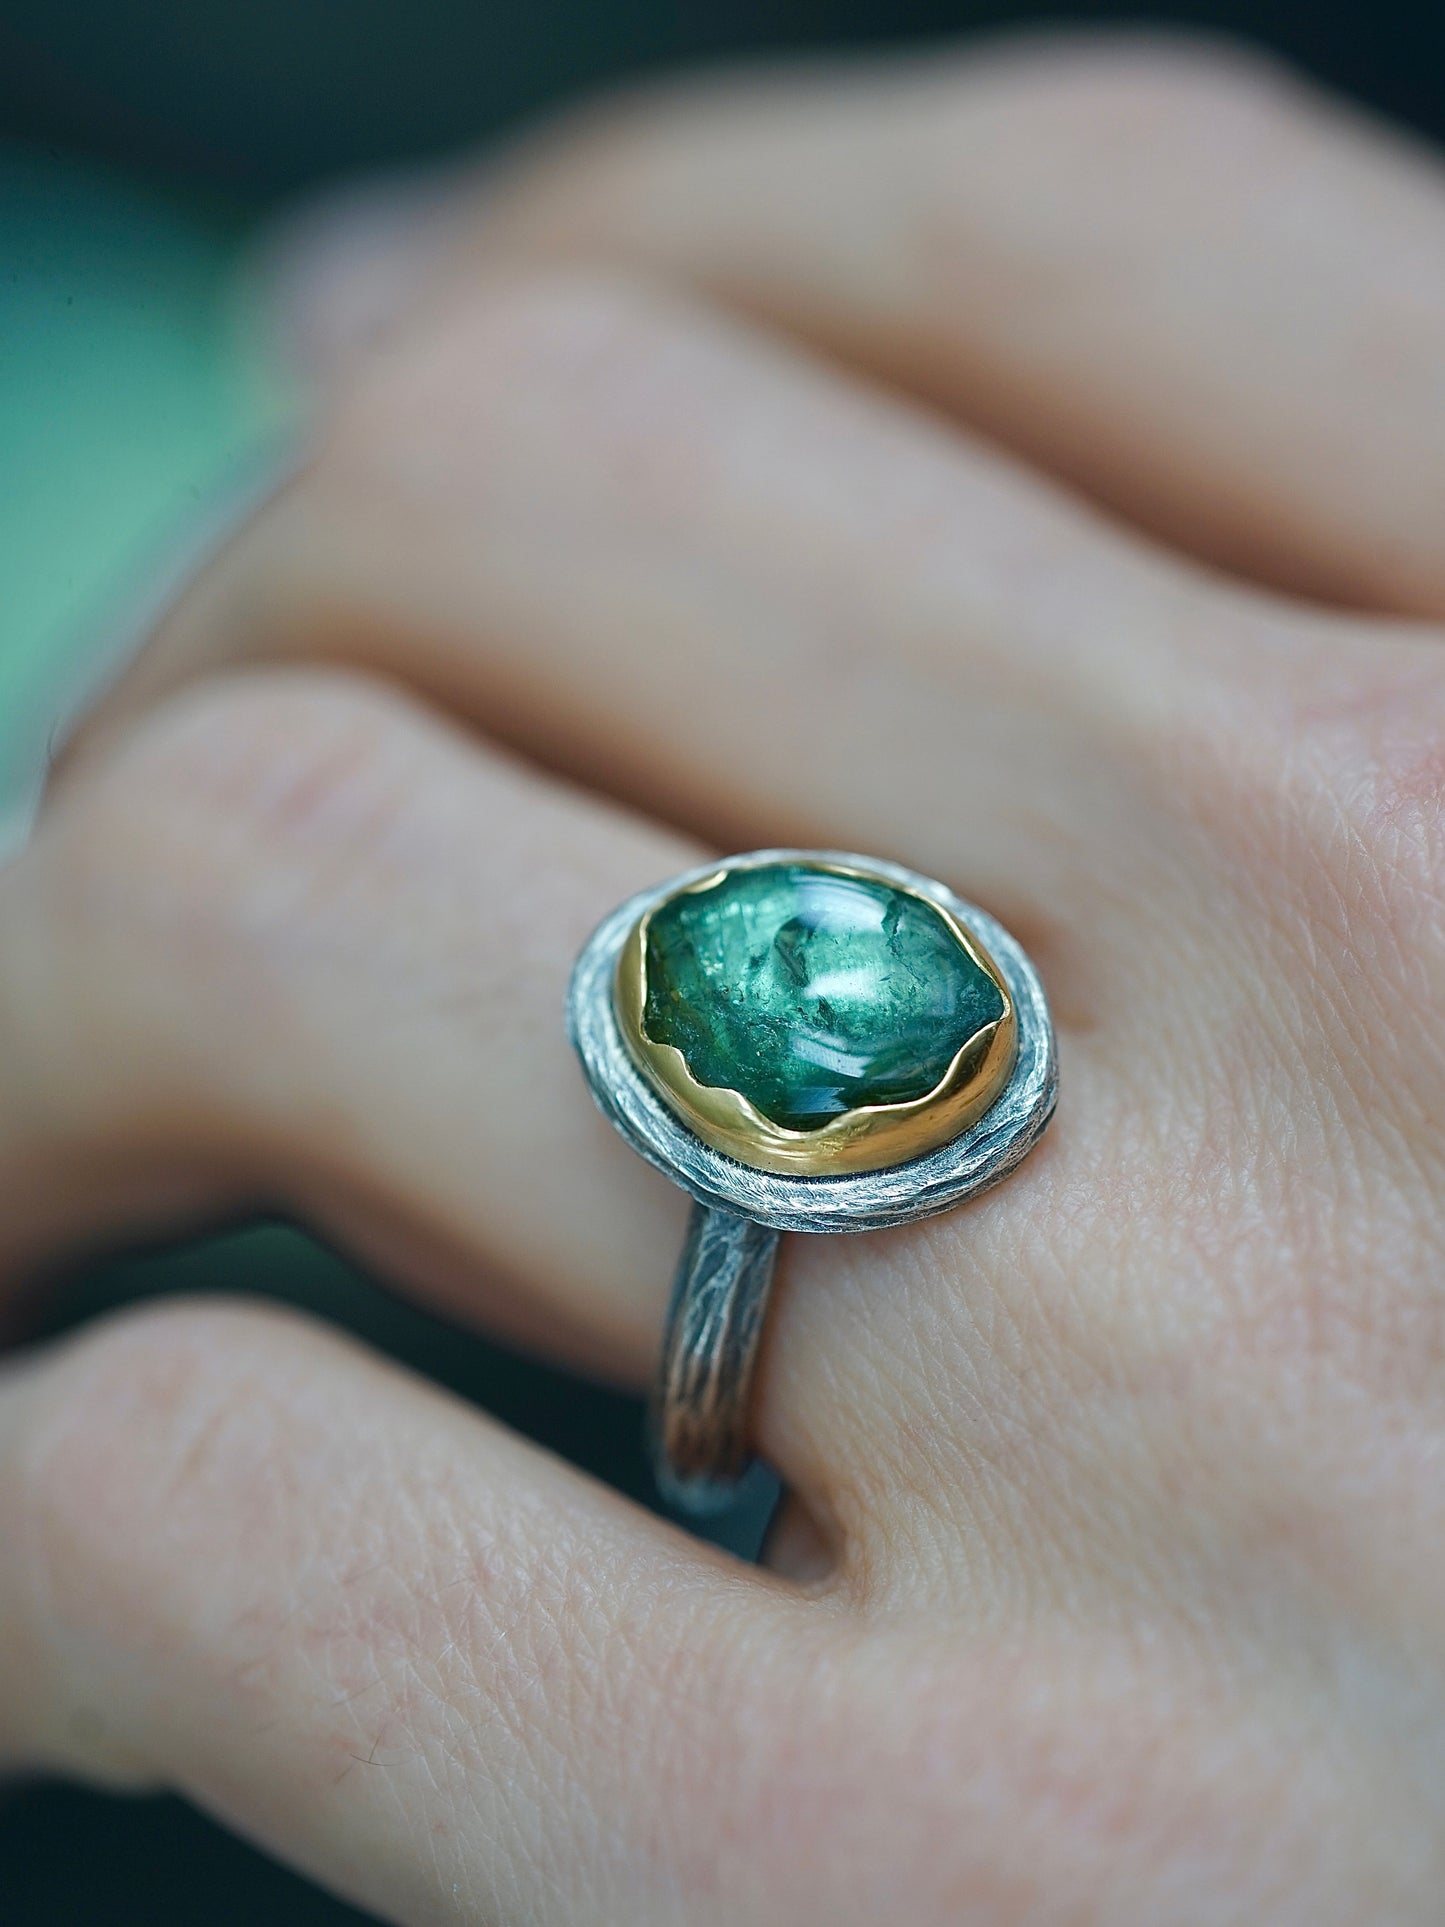 Green tourmaline ring, size 6.5